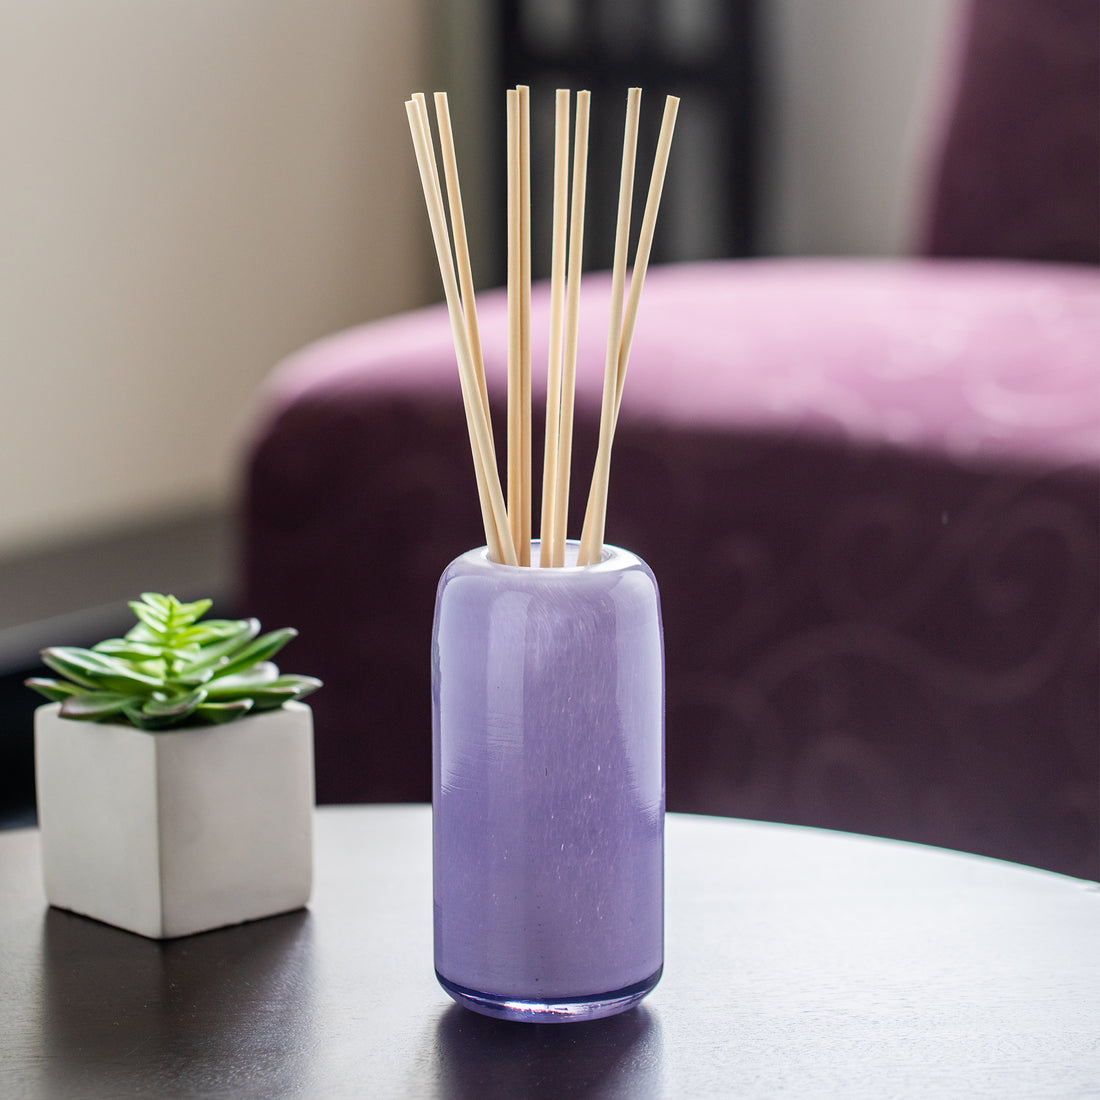 Sparoom Lavender Bergamot Glass Reed Diffuser with Reed Sticks - 4 units (200ml)